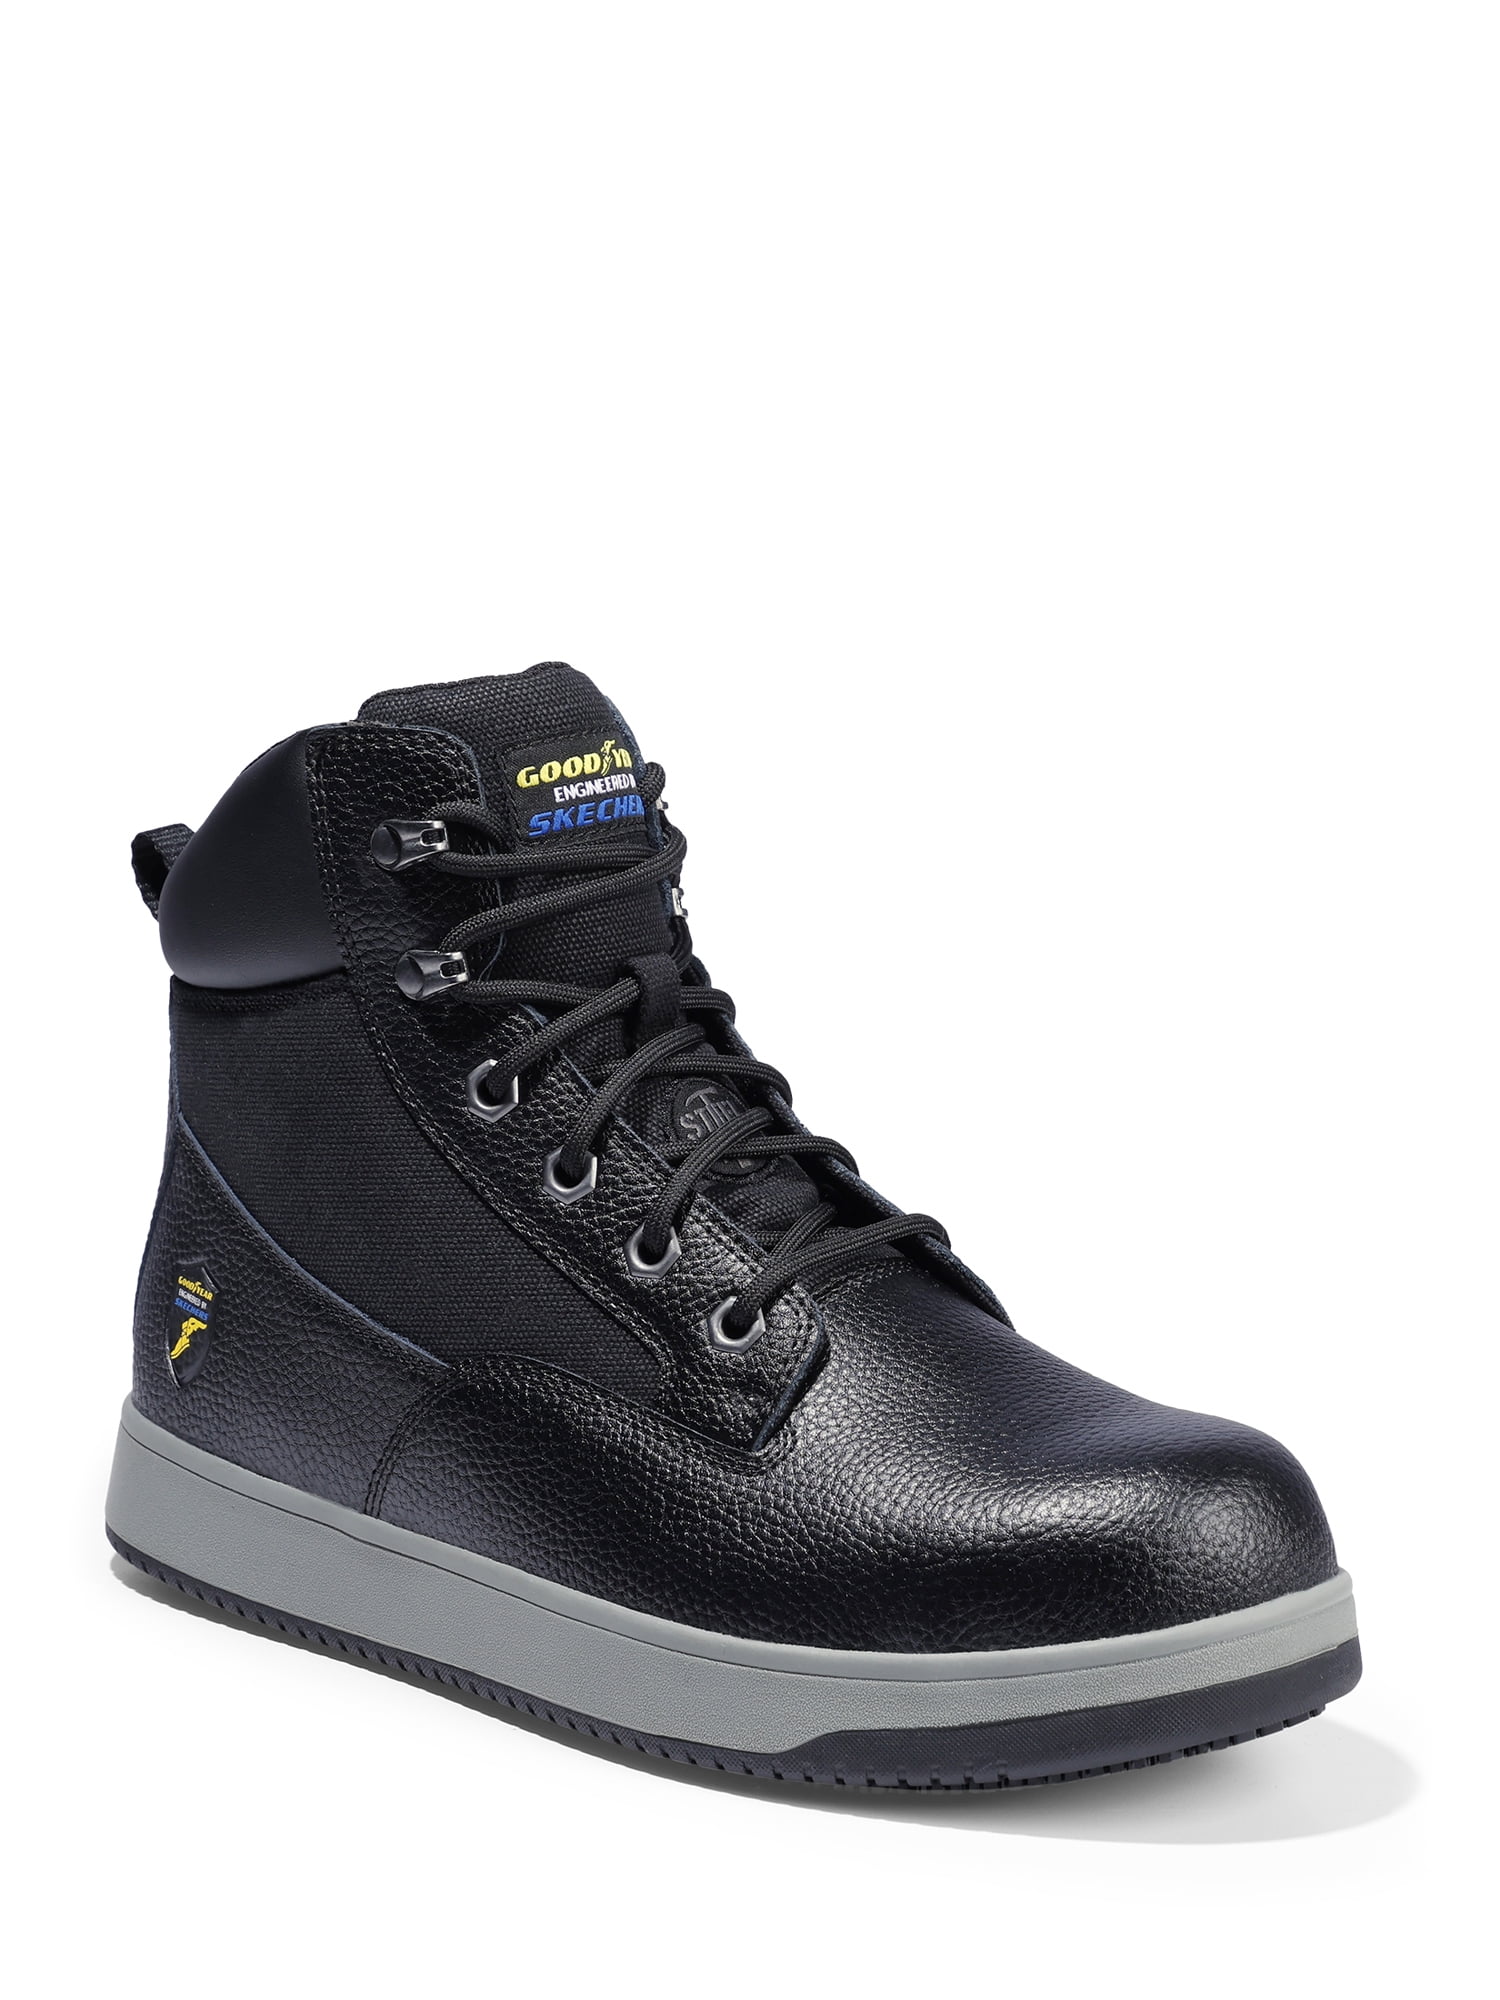 Goodyear Engineered by Skechers Men's Onyx High Slip Resistant Steel Boots - Walmart.com